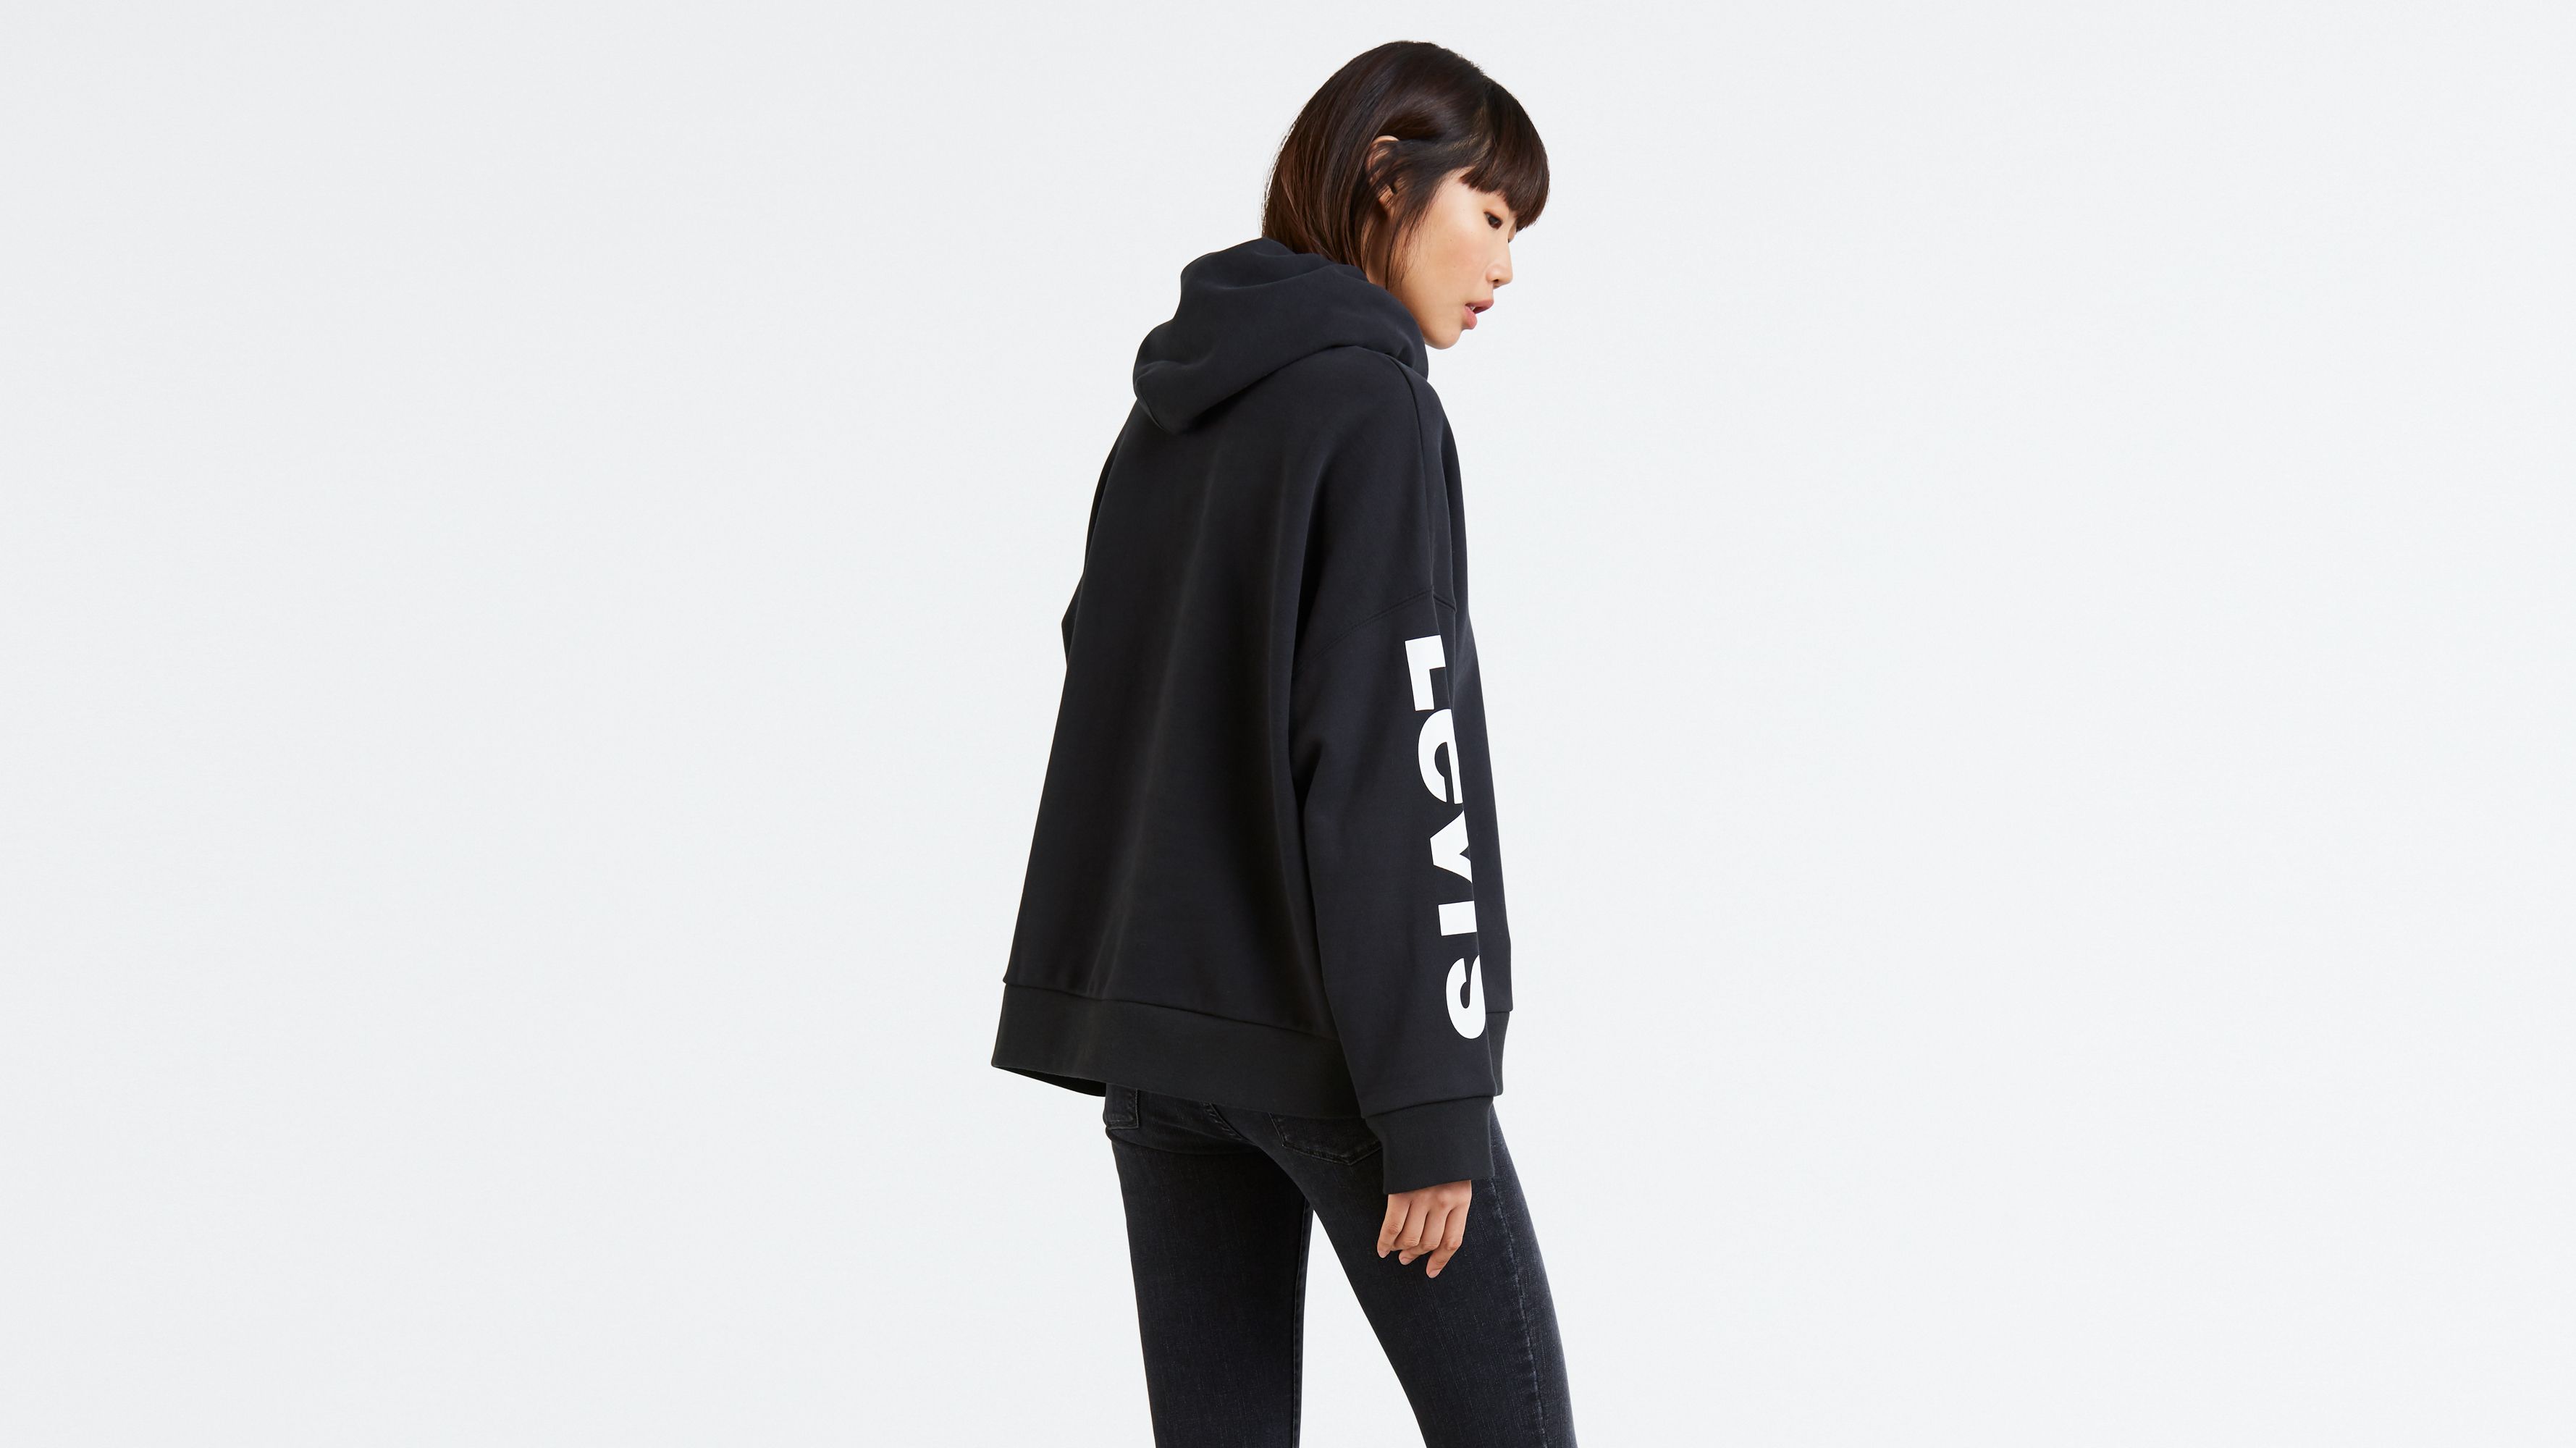 graphic oversized hoodie levis